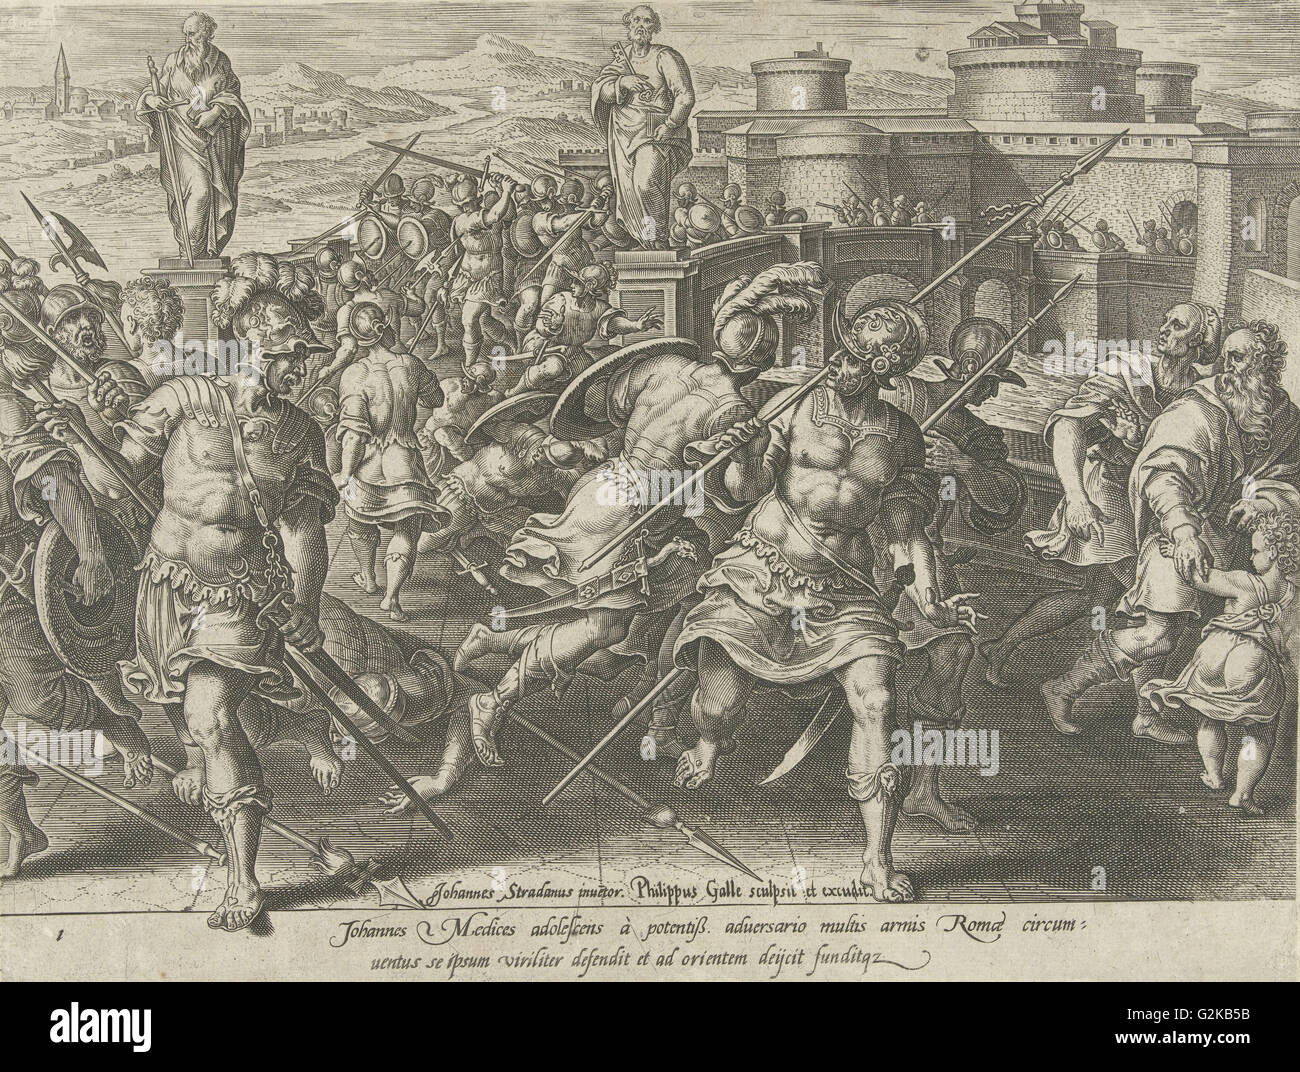 Giovanni de Medici surrounded in Rome, Philips Galle, 1583 Stock Photo -  Alamy